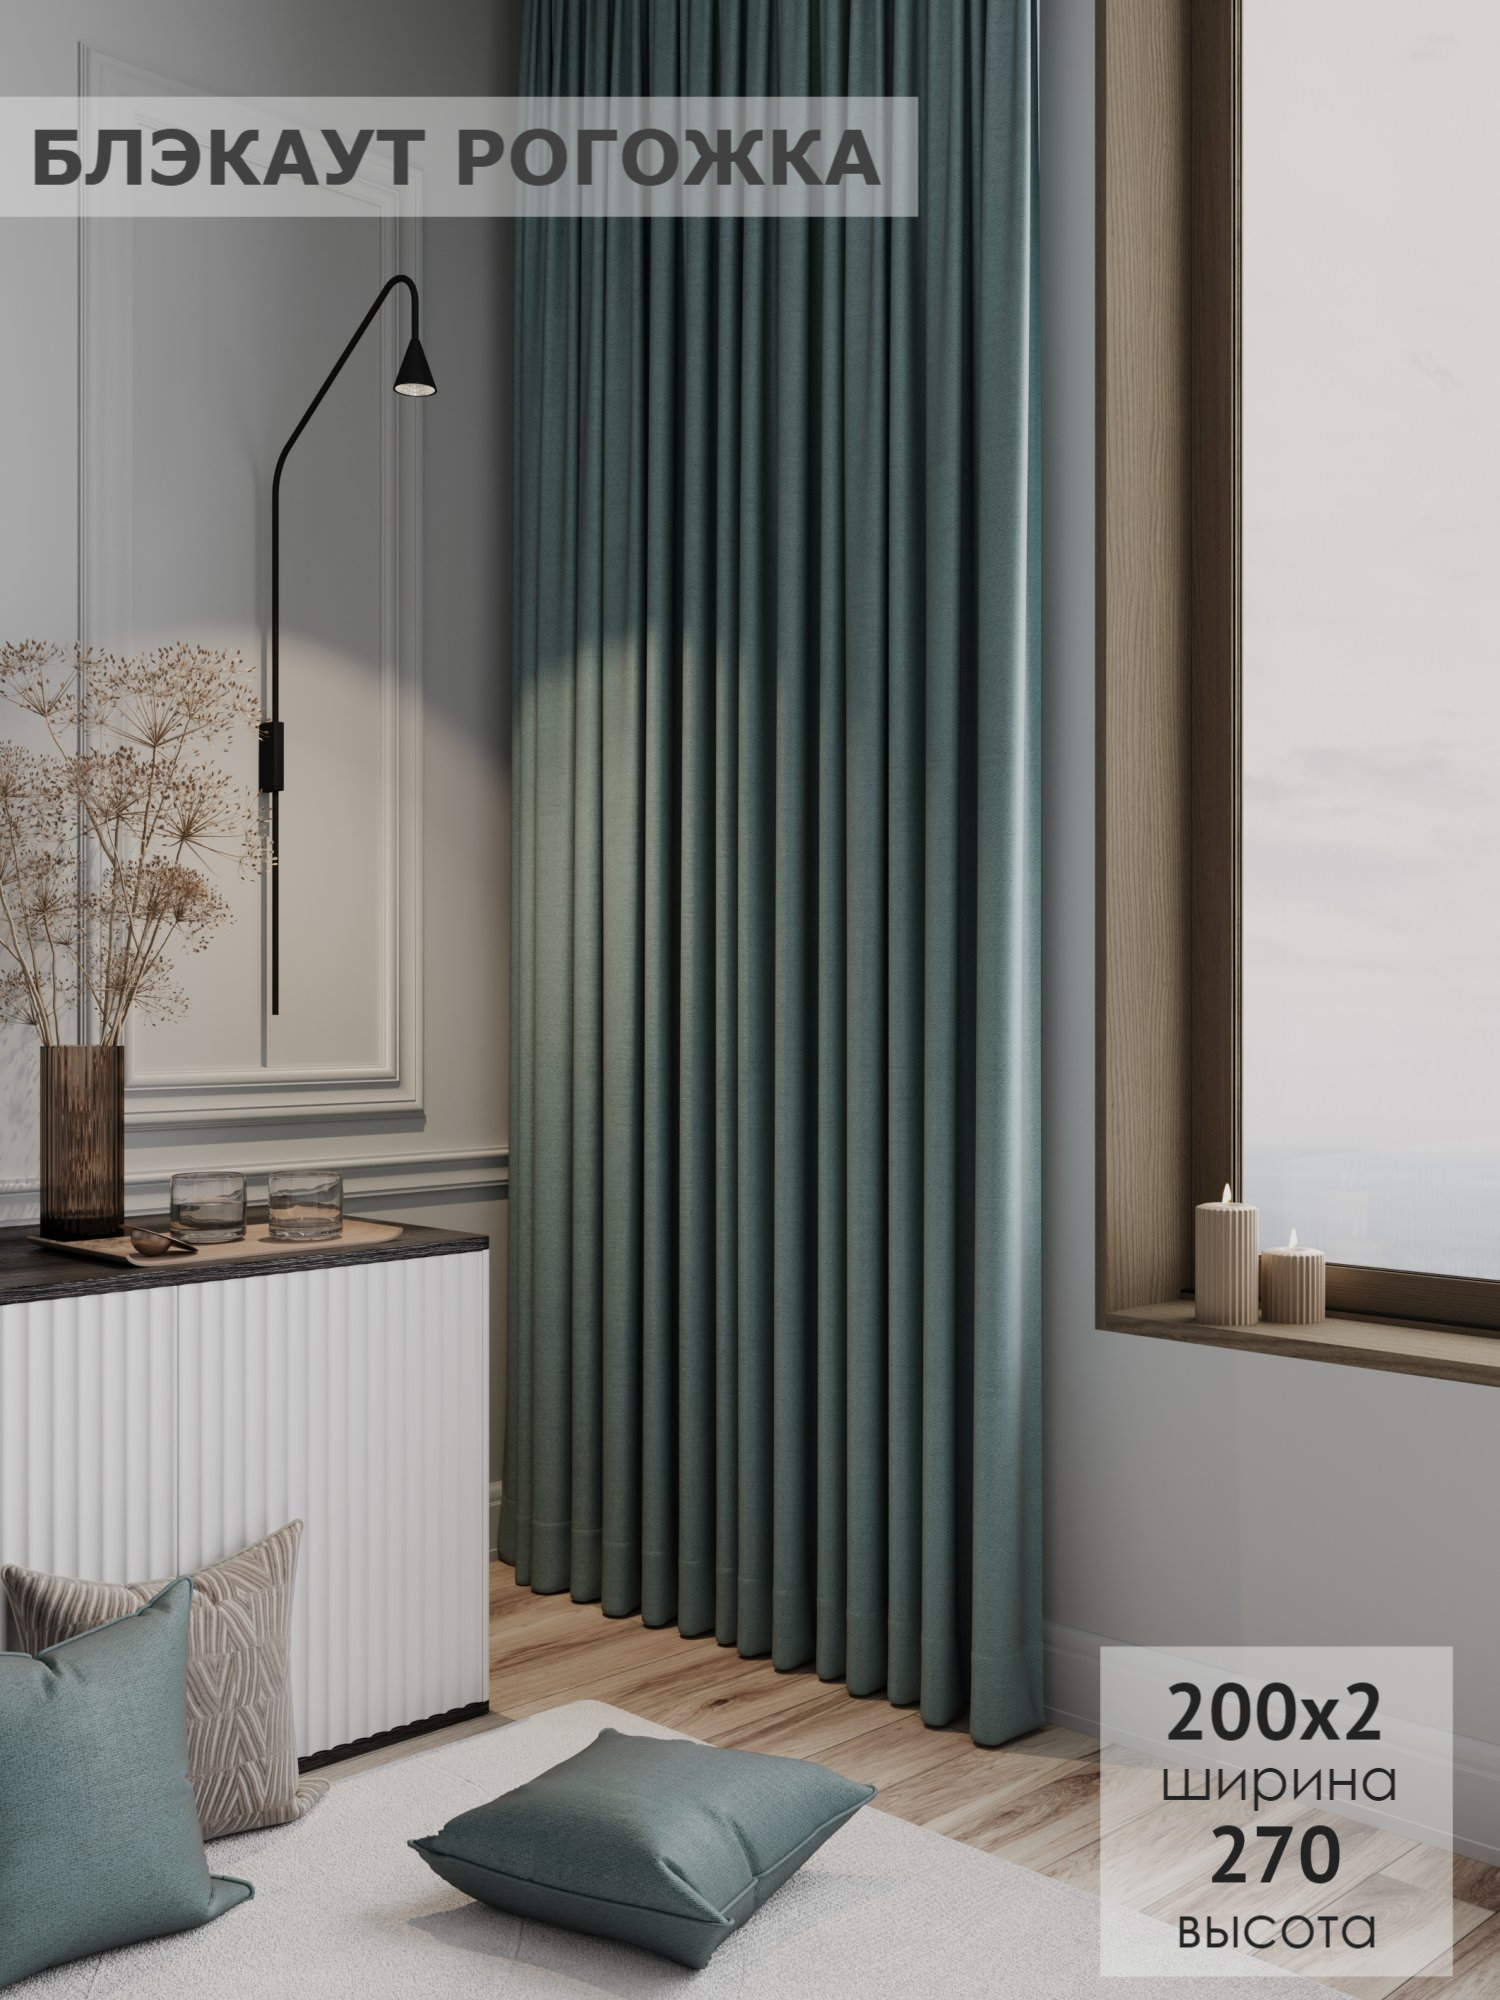 Комплект штор KS interior textile Блэкаут рогожка 200х270 2шт цвет зелено-голубой